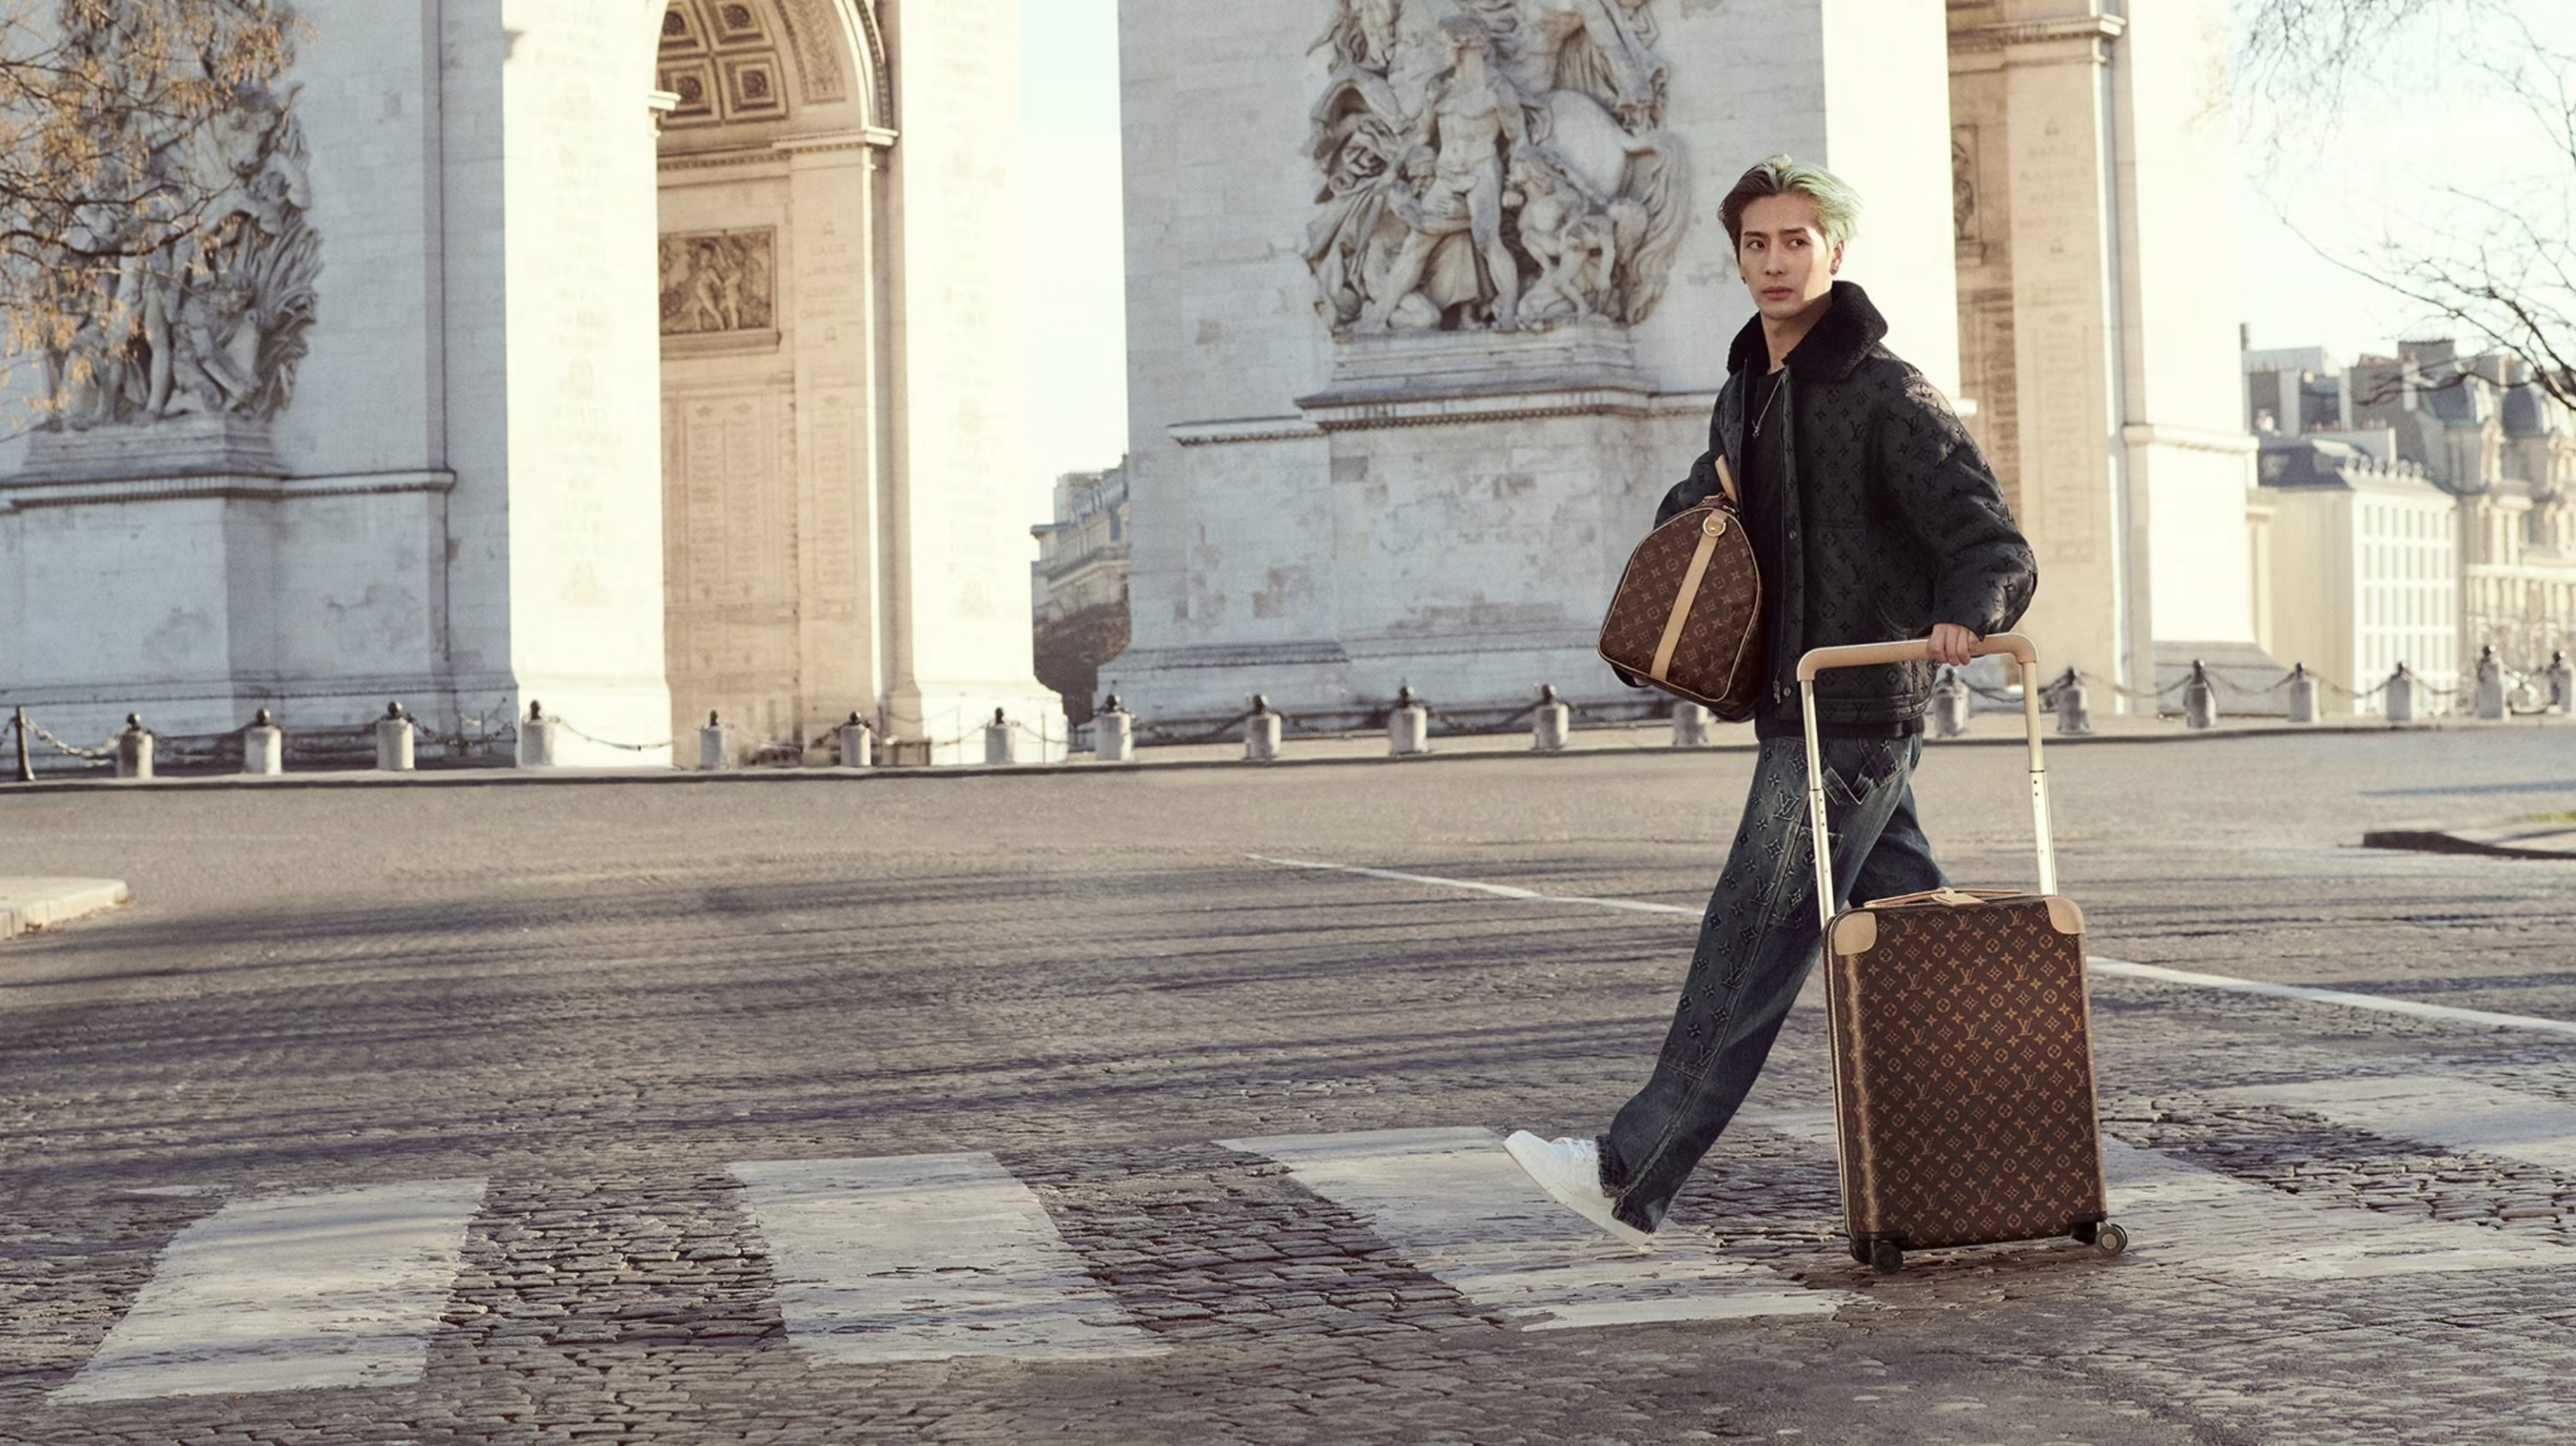 Louis Vuitton Pre-Fall 2016 Spirit Of Travel Campaign